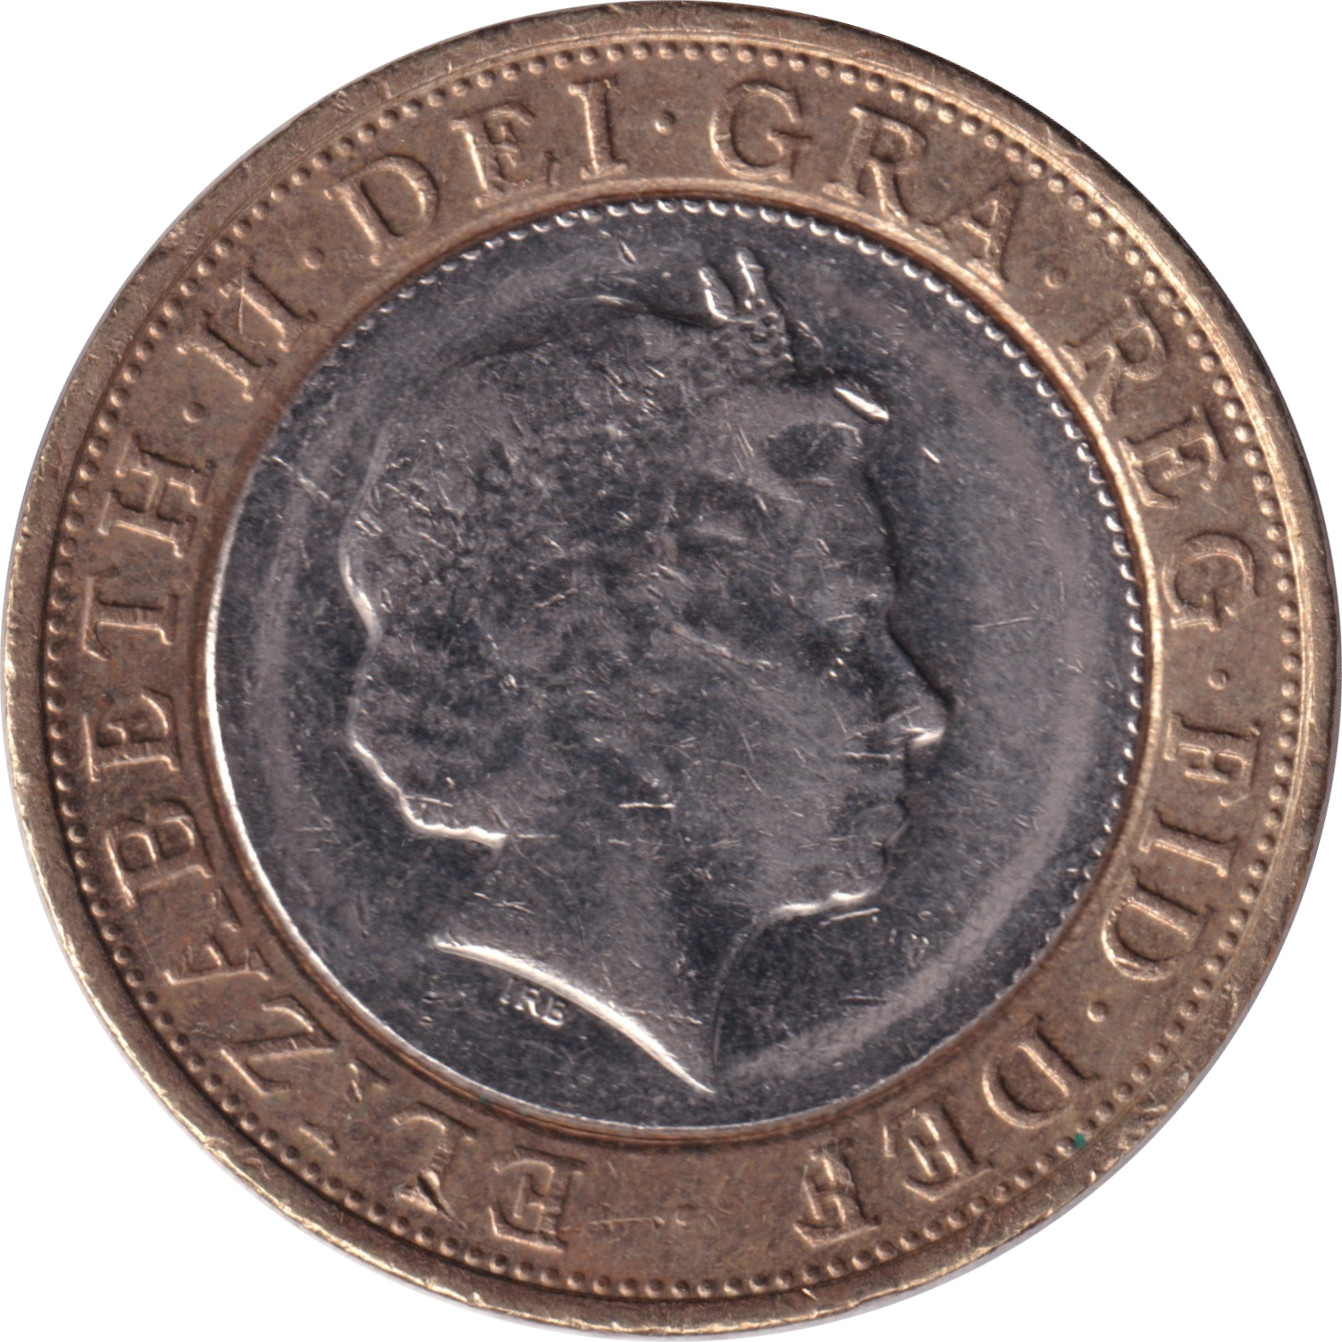 2 pound - Elizabeth II - Old head